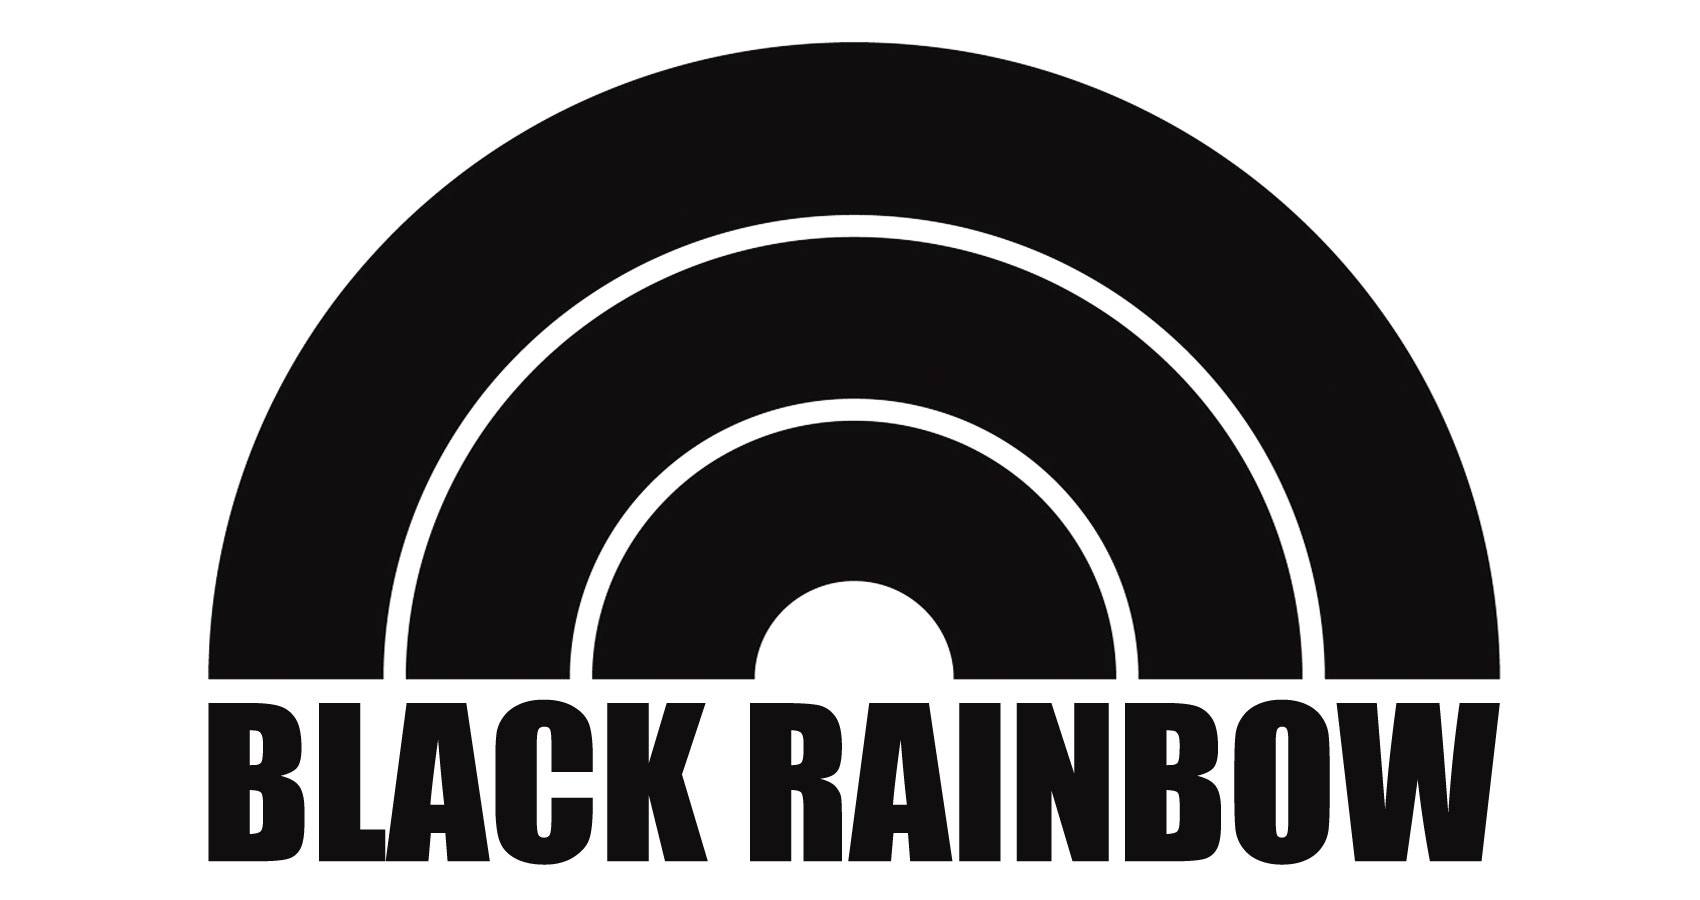 https://spillwords.com/wp-content/uploads/2016/12/Black-Rainbow-spillwords.jpg